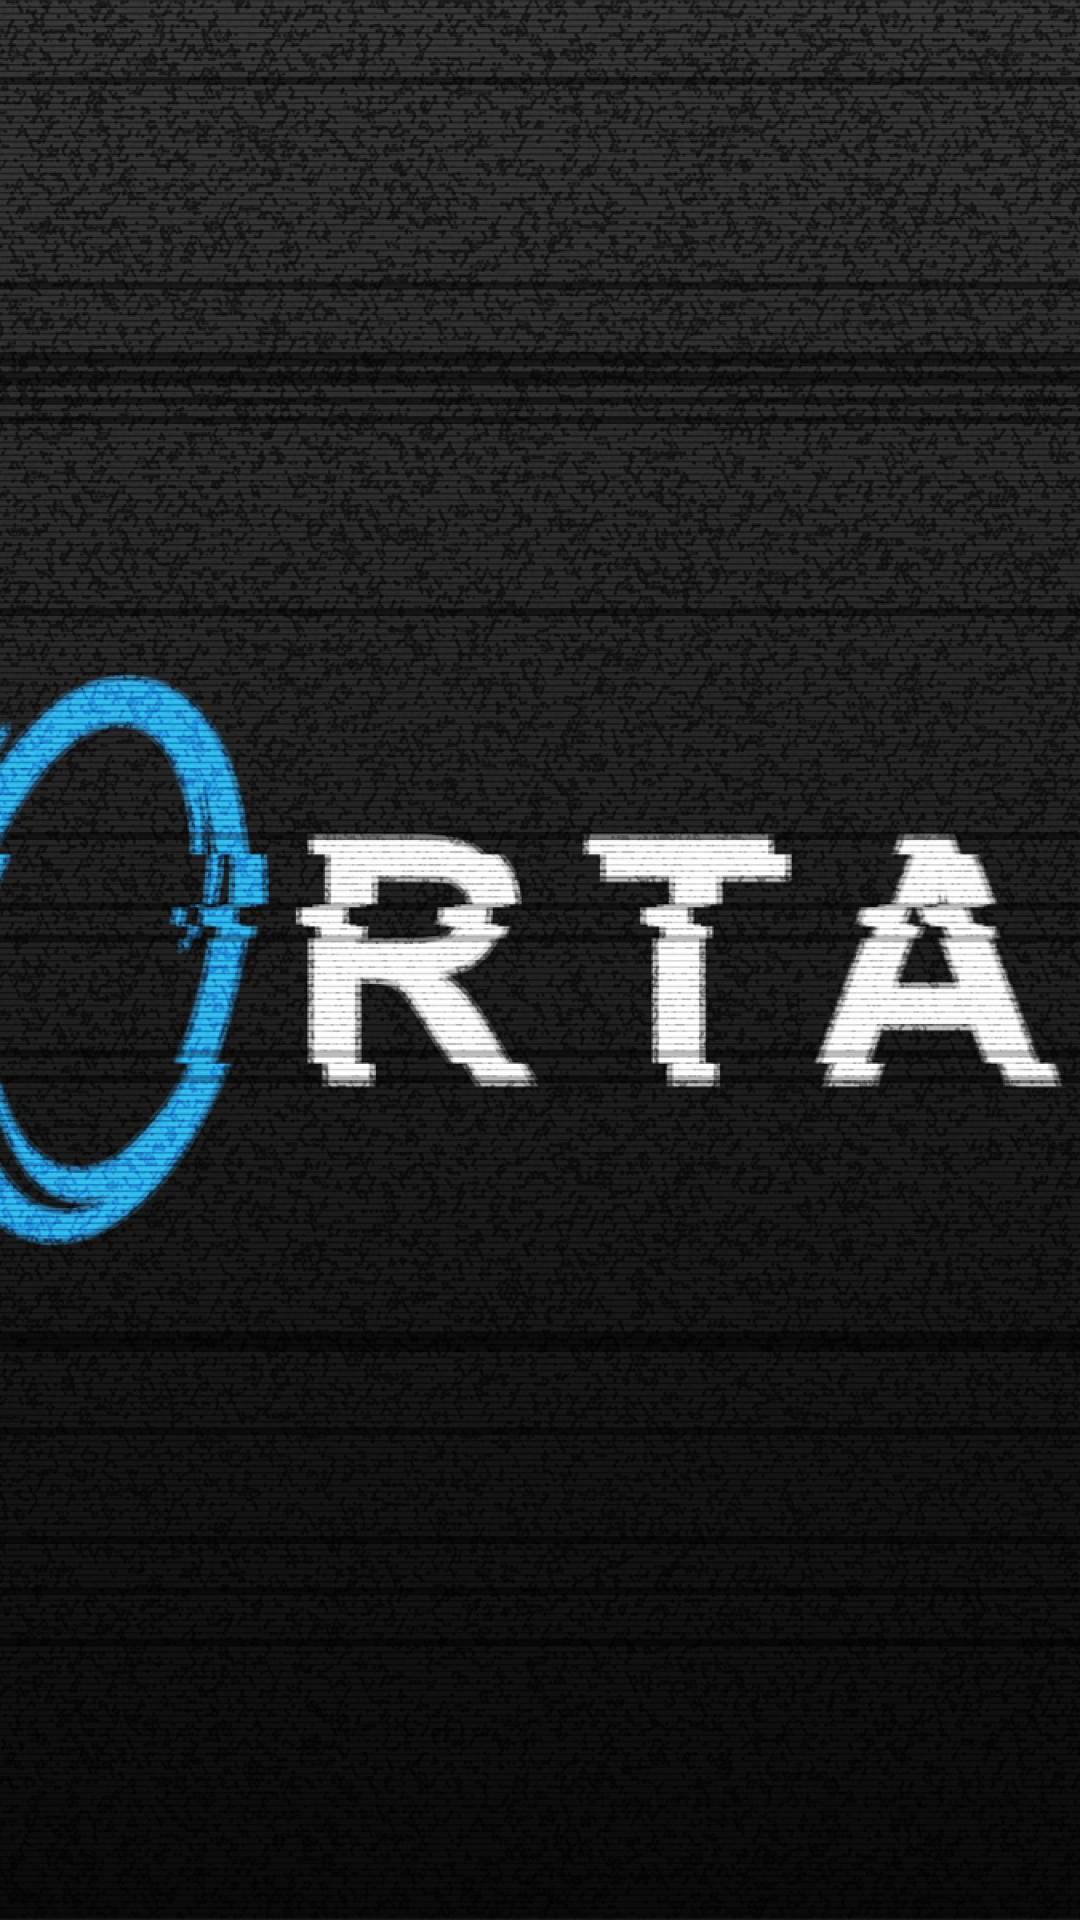 Portal 2 S4 Wallpaper Iphone6plus壁紙 待受画像ギャラリー